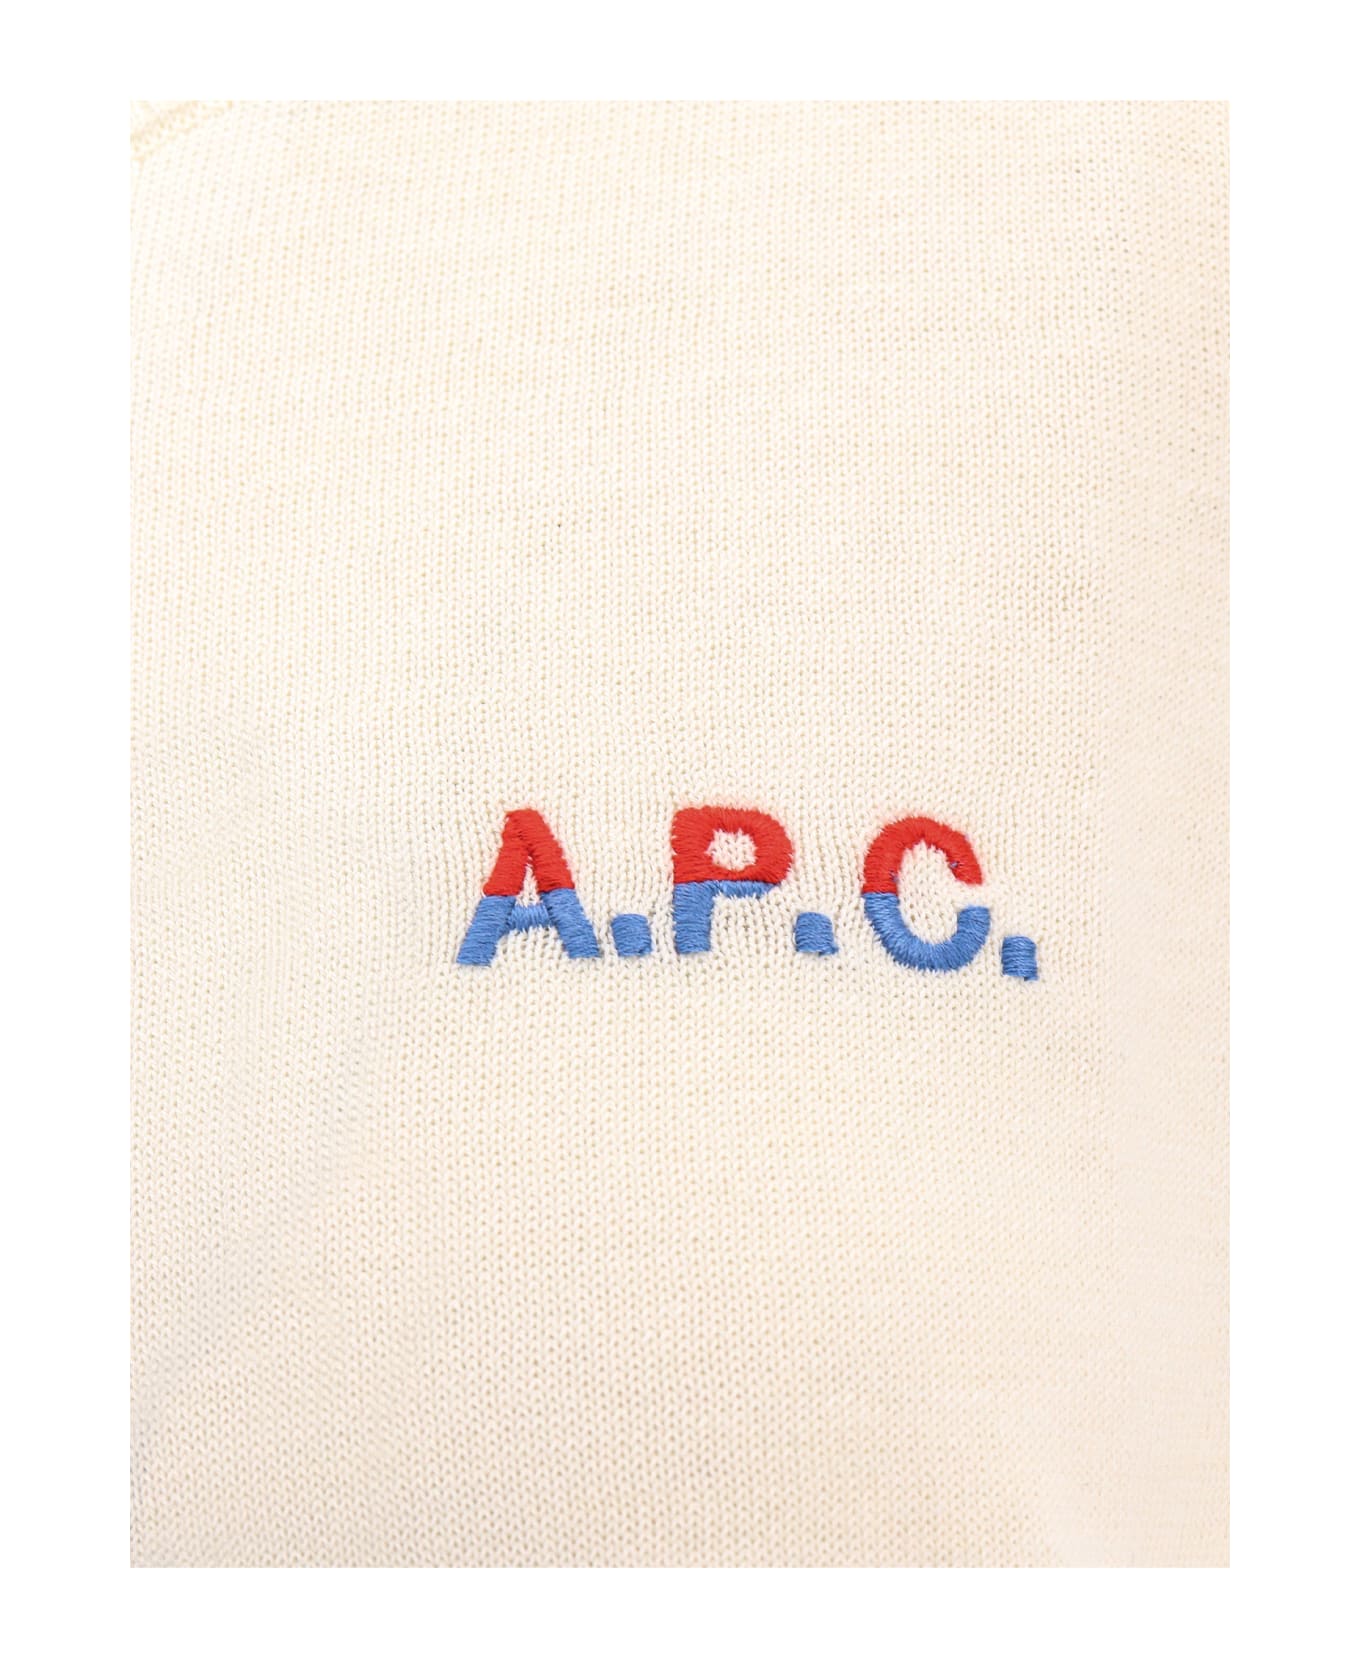 A.P.C. Logo Crew Neck Sweater - White